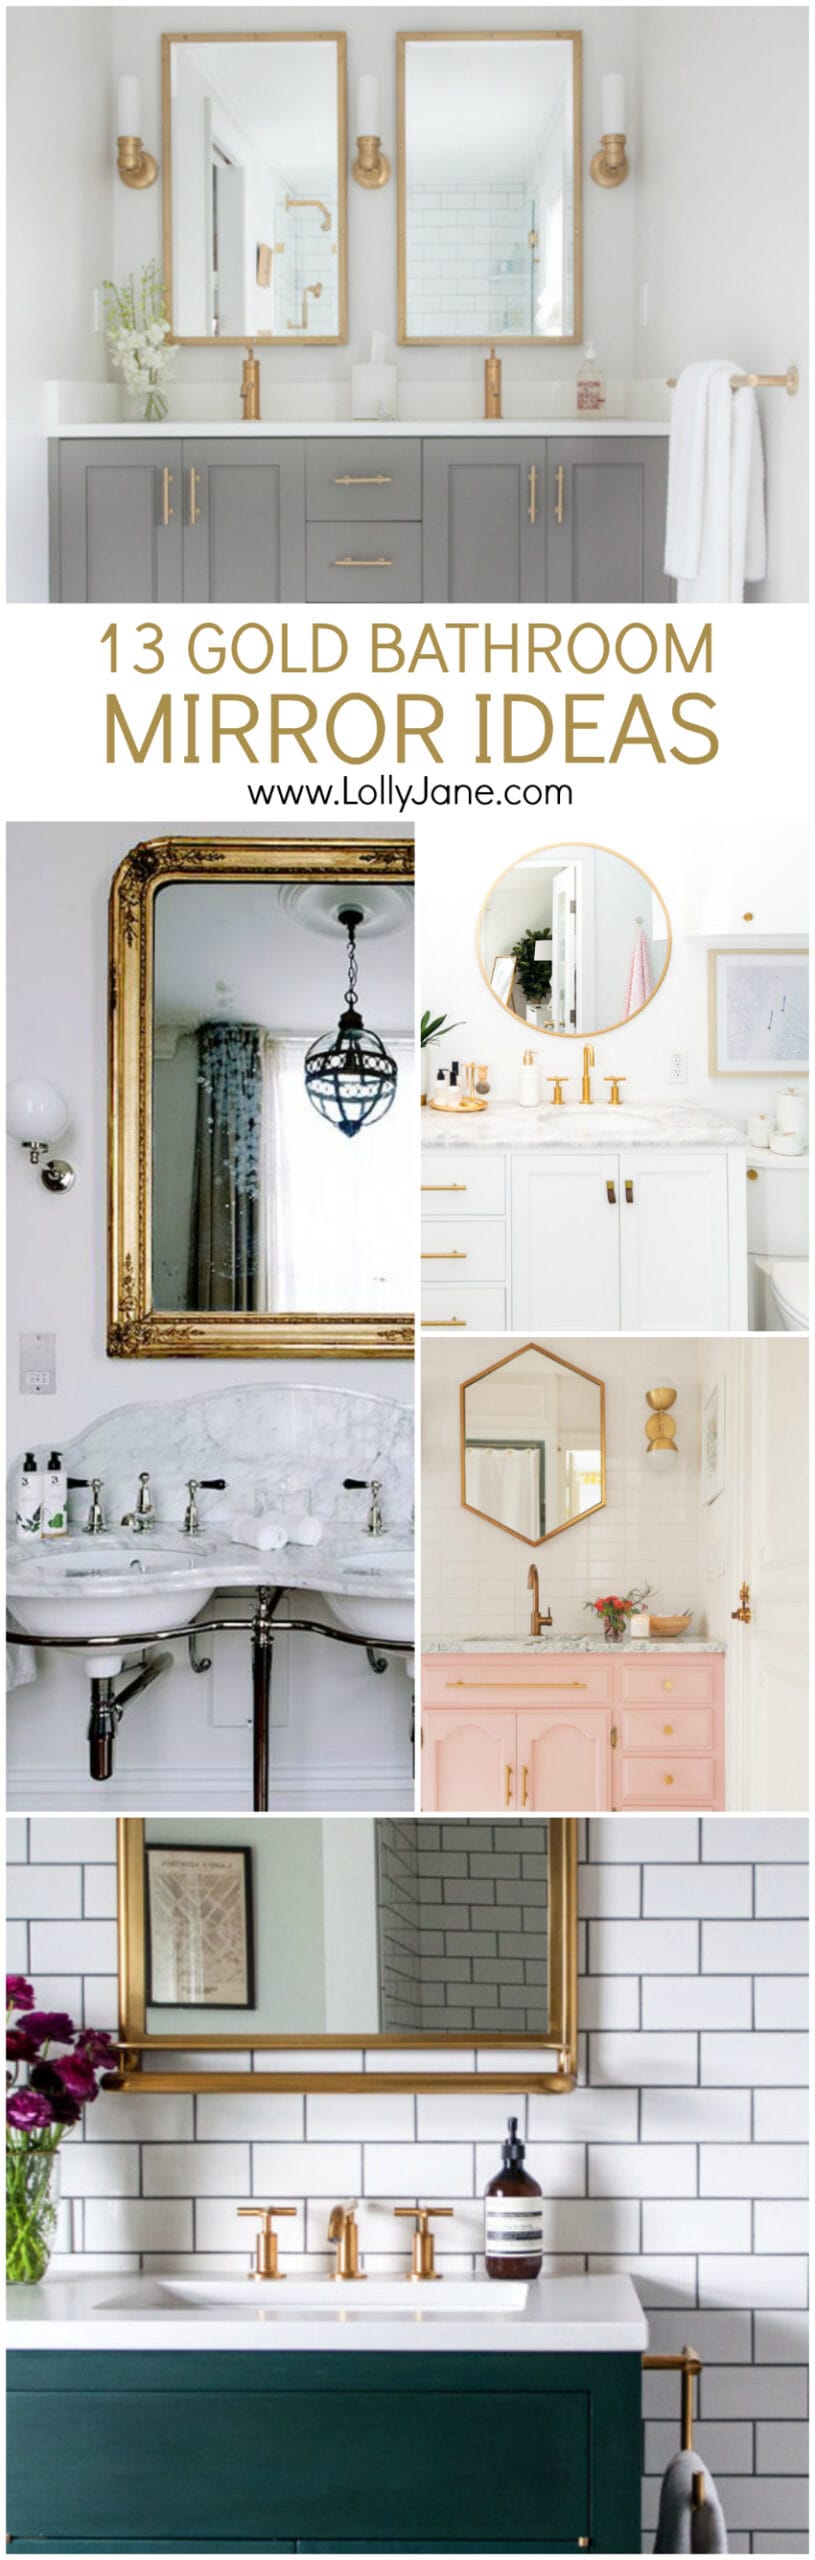 13 gold bathroom mirror ideas